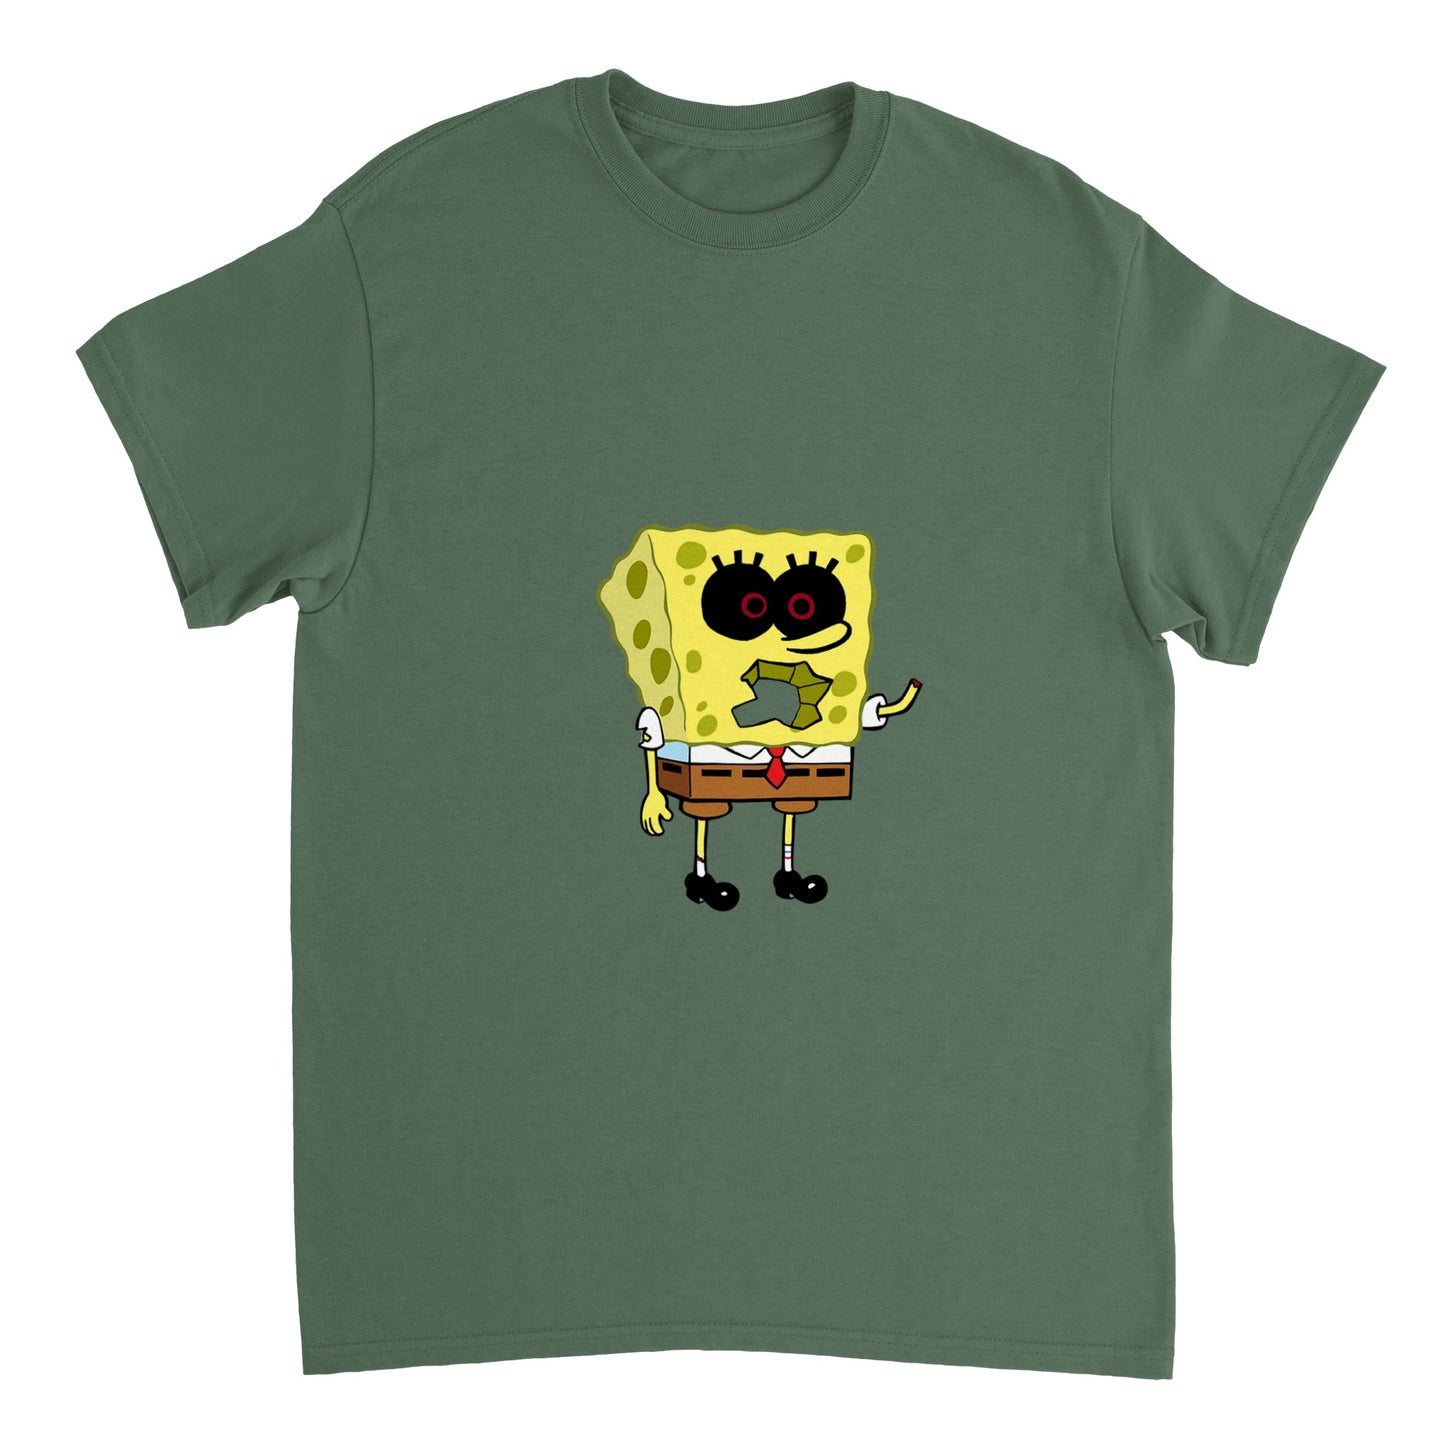 dead spongebob shirt